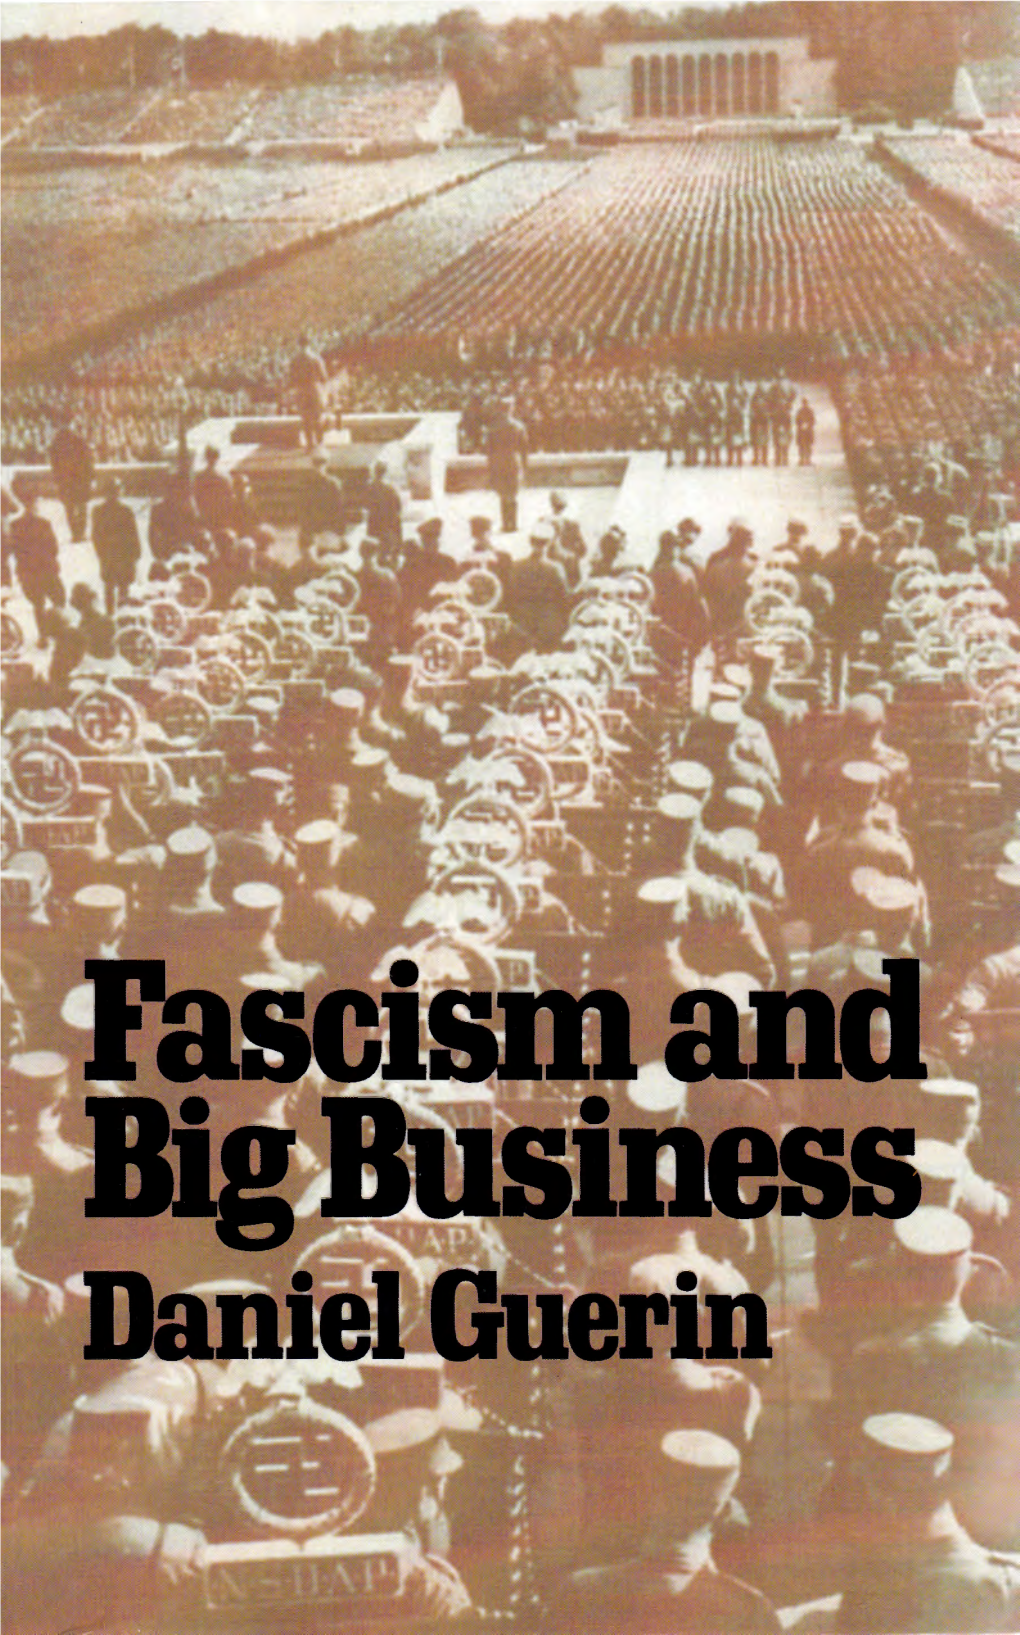 Daniel Guerin, Fascism and Big Business